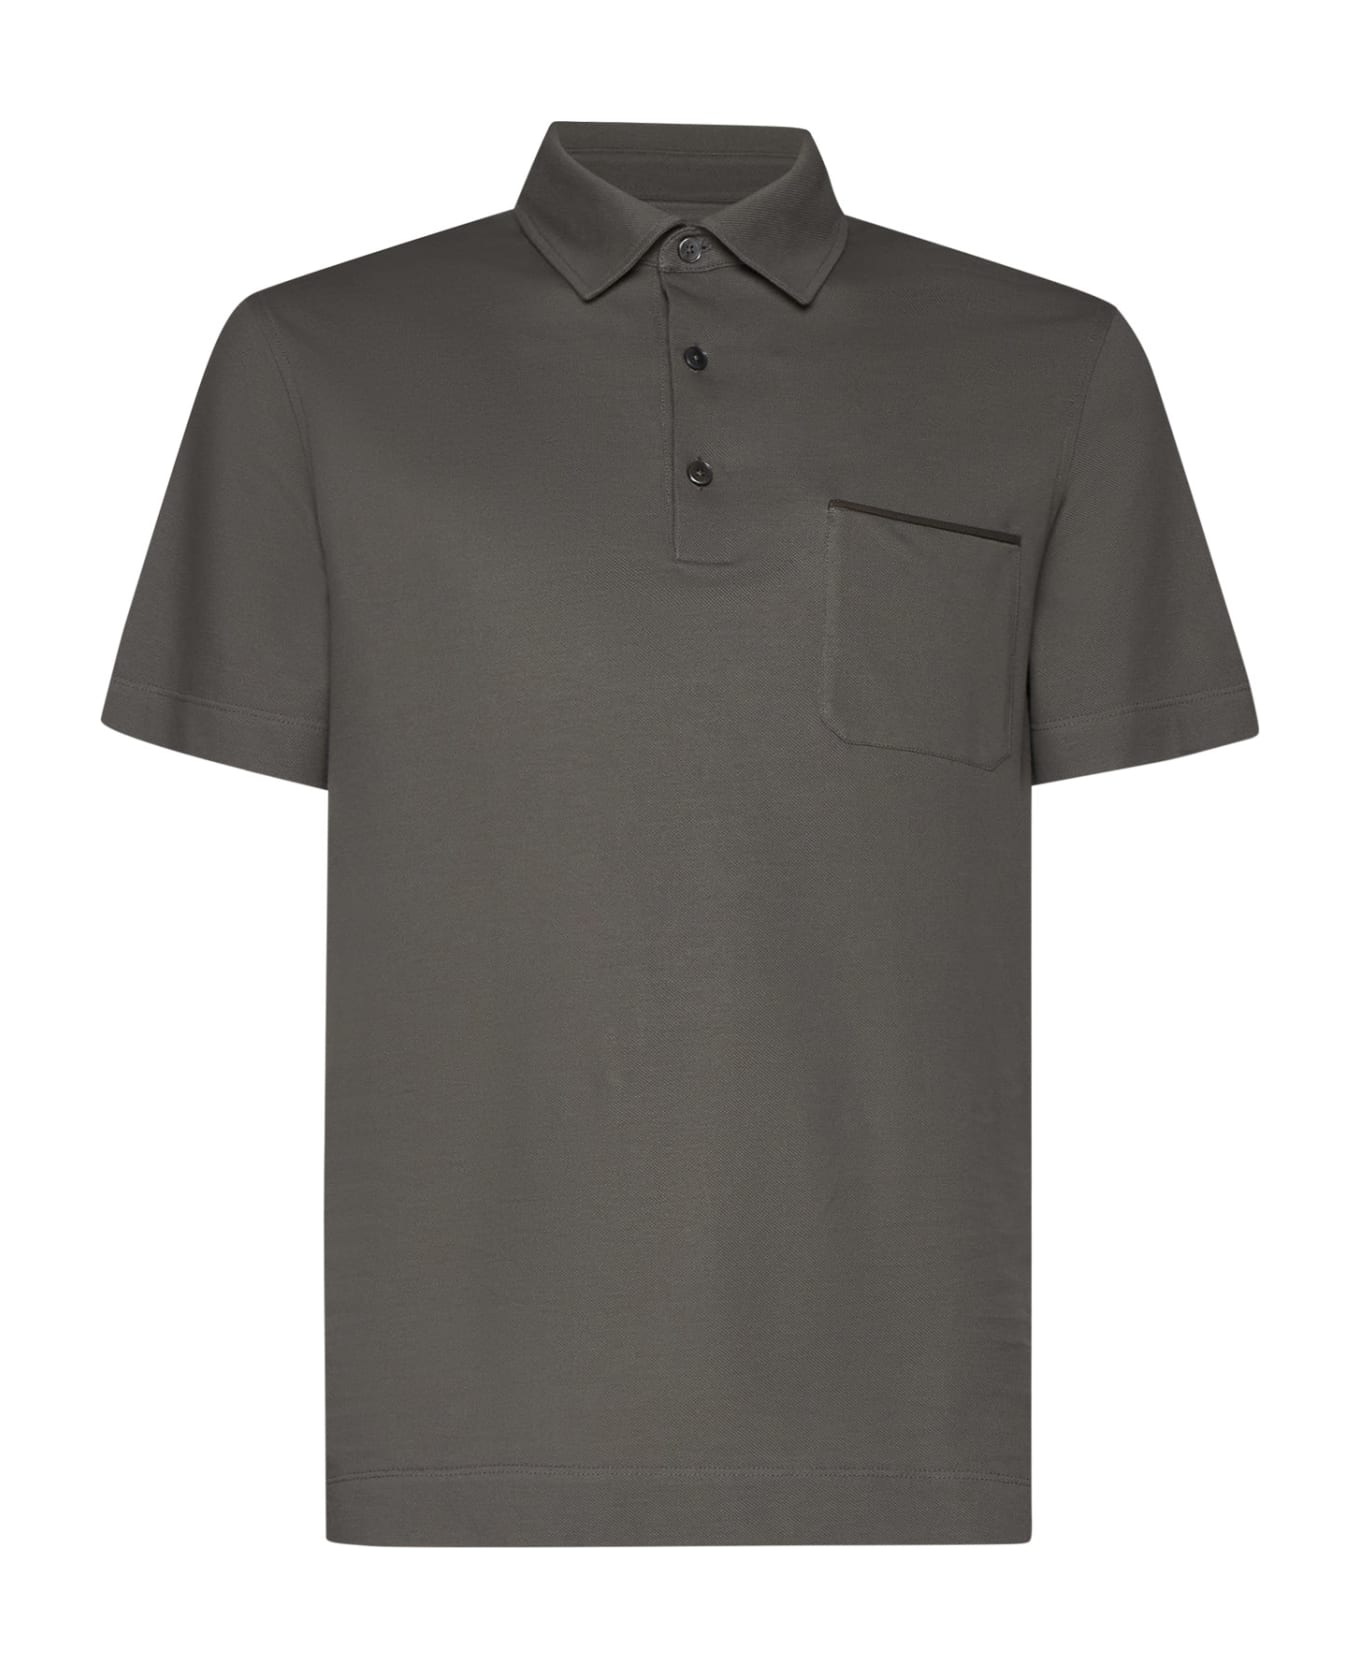 Zegna Polo Shirt - Beige